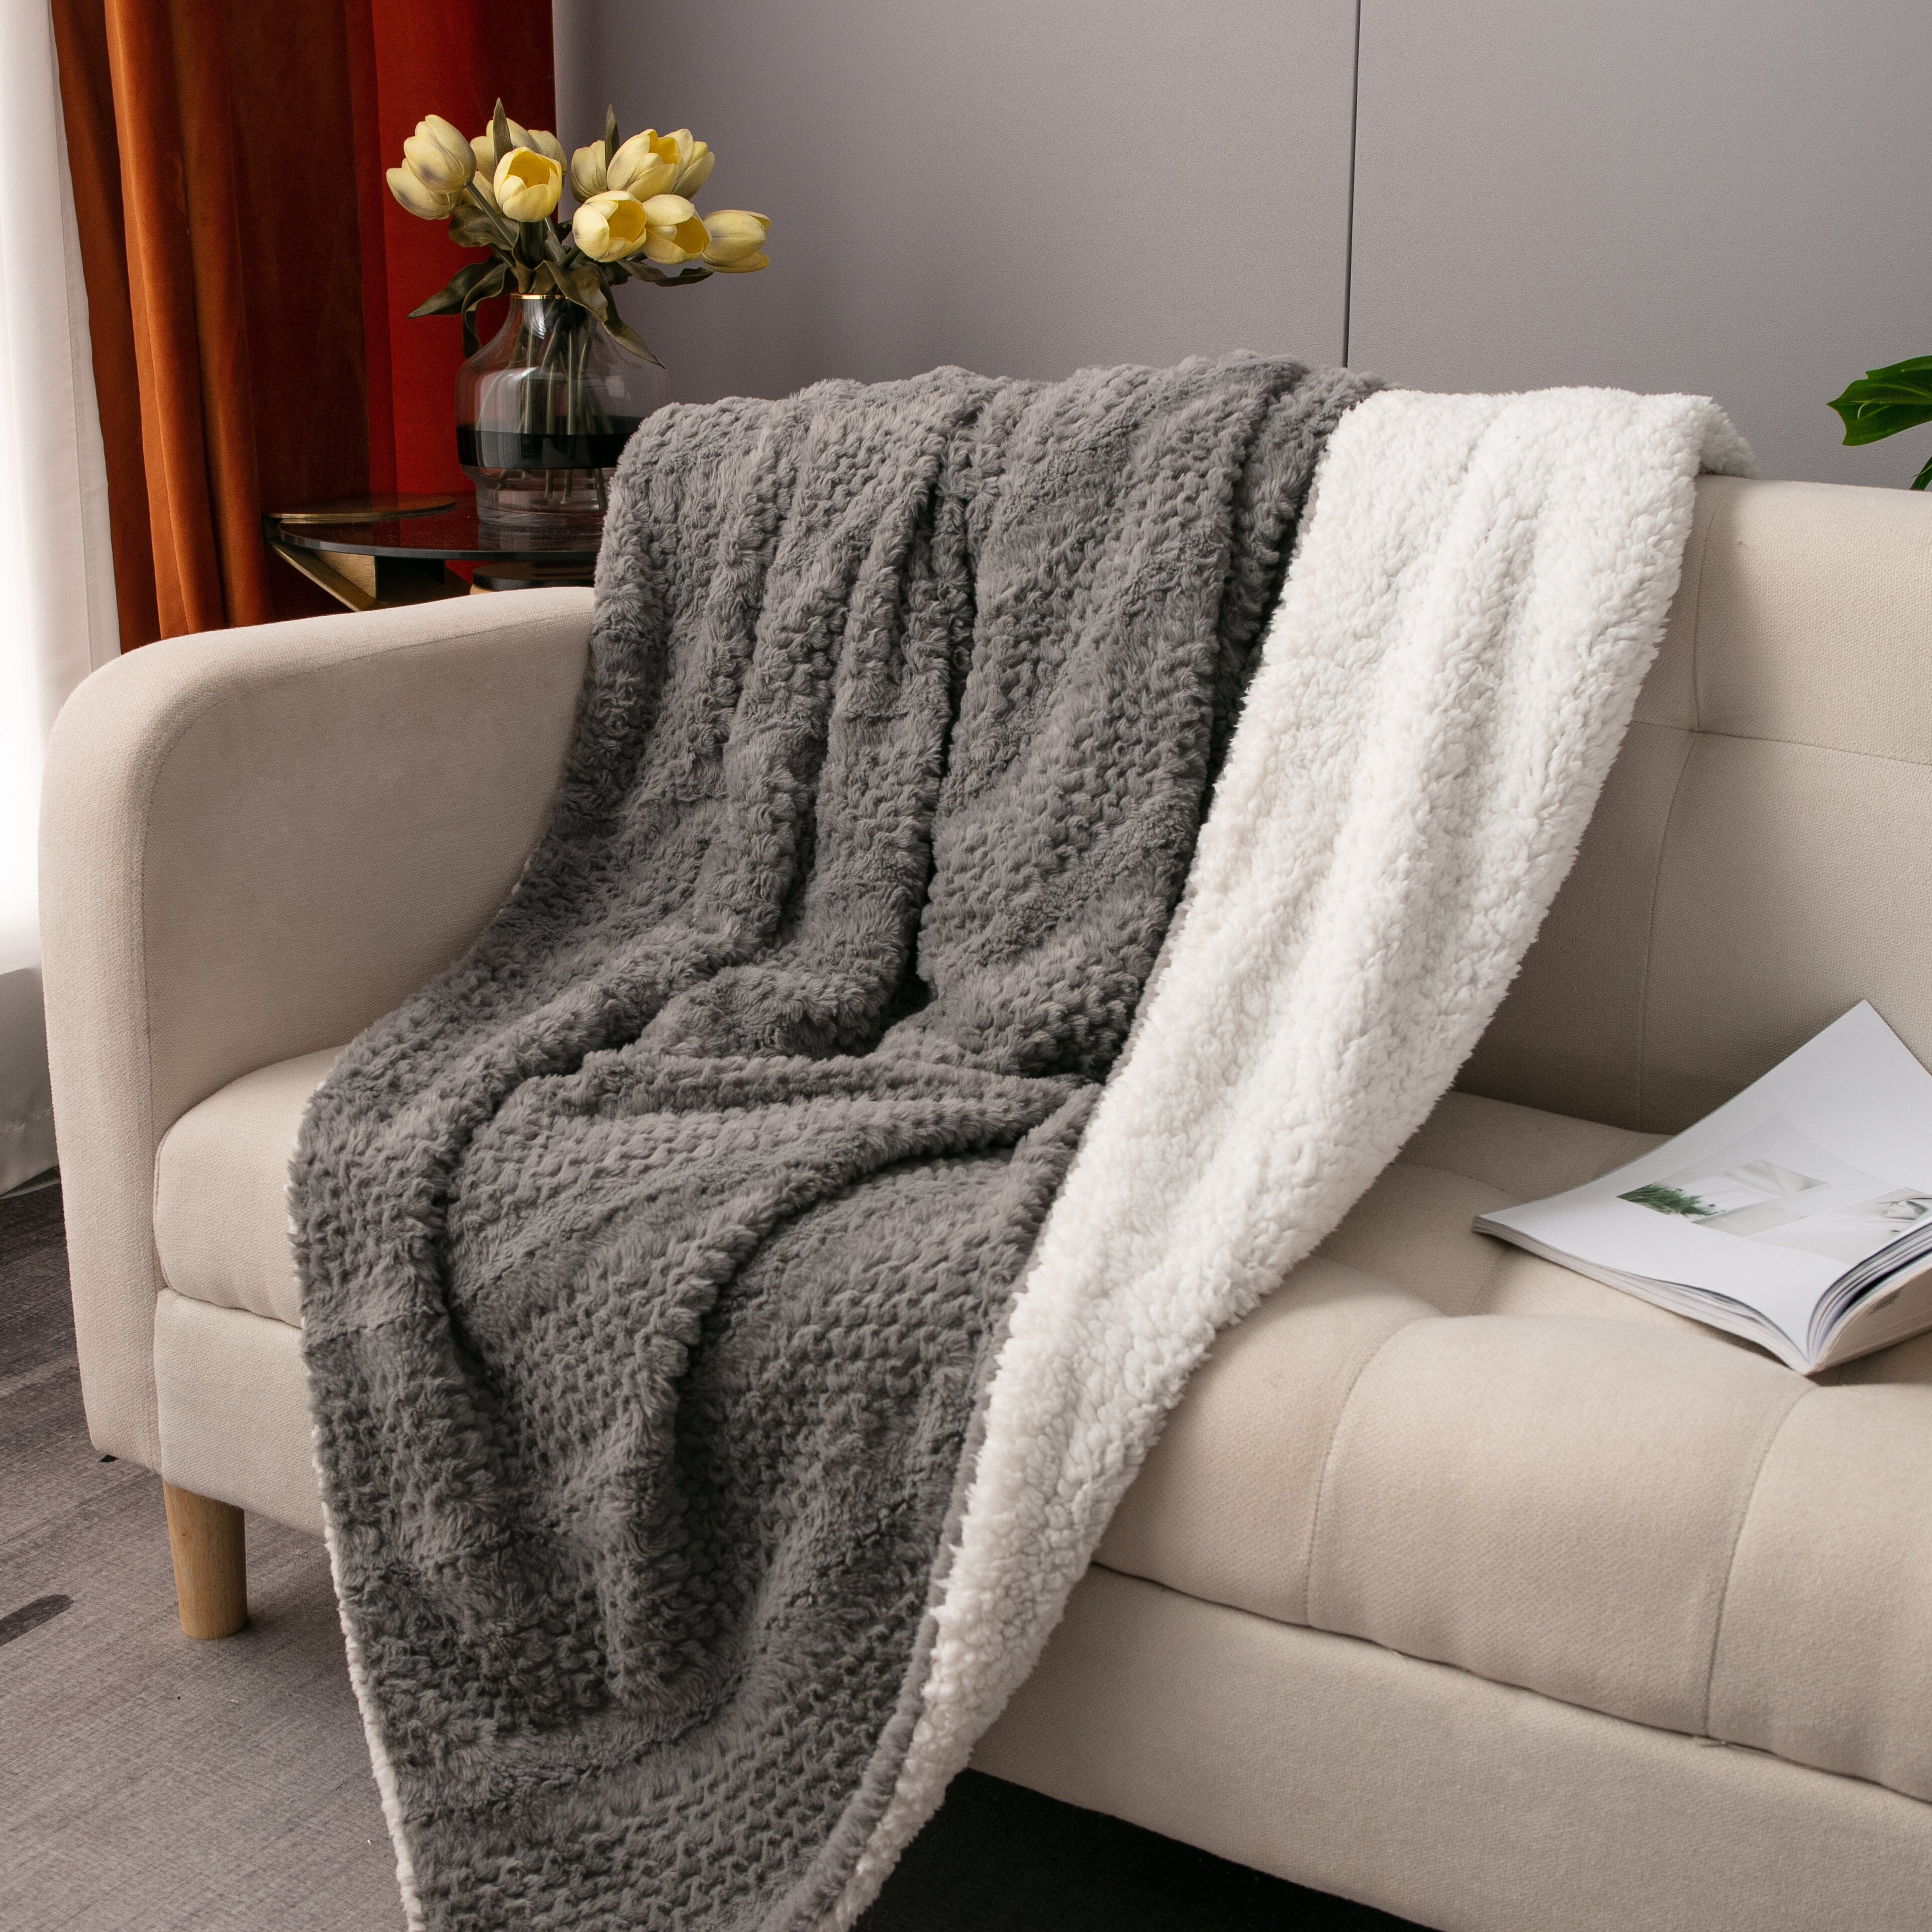 Tache Dark Grey Faux Fur Throw Blanket Bubble Textured Striped Embossed (#11) - Tache Home Fashion